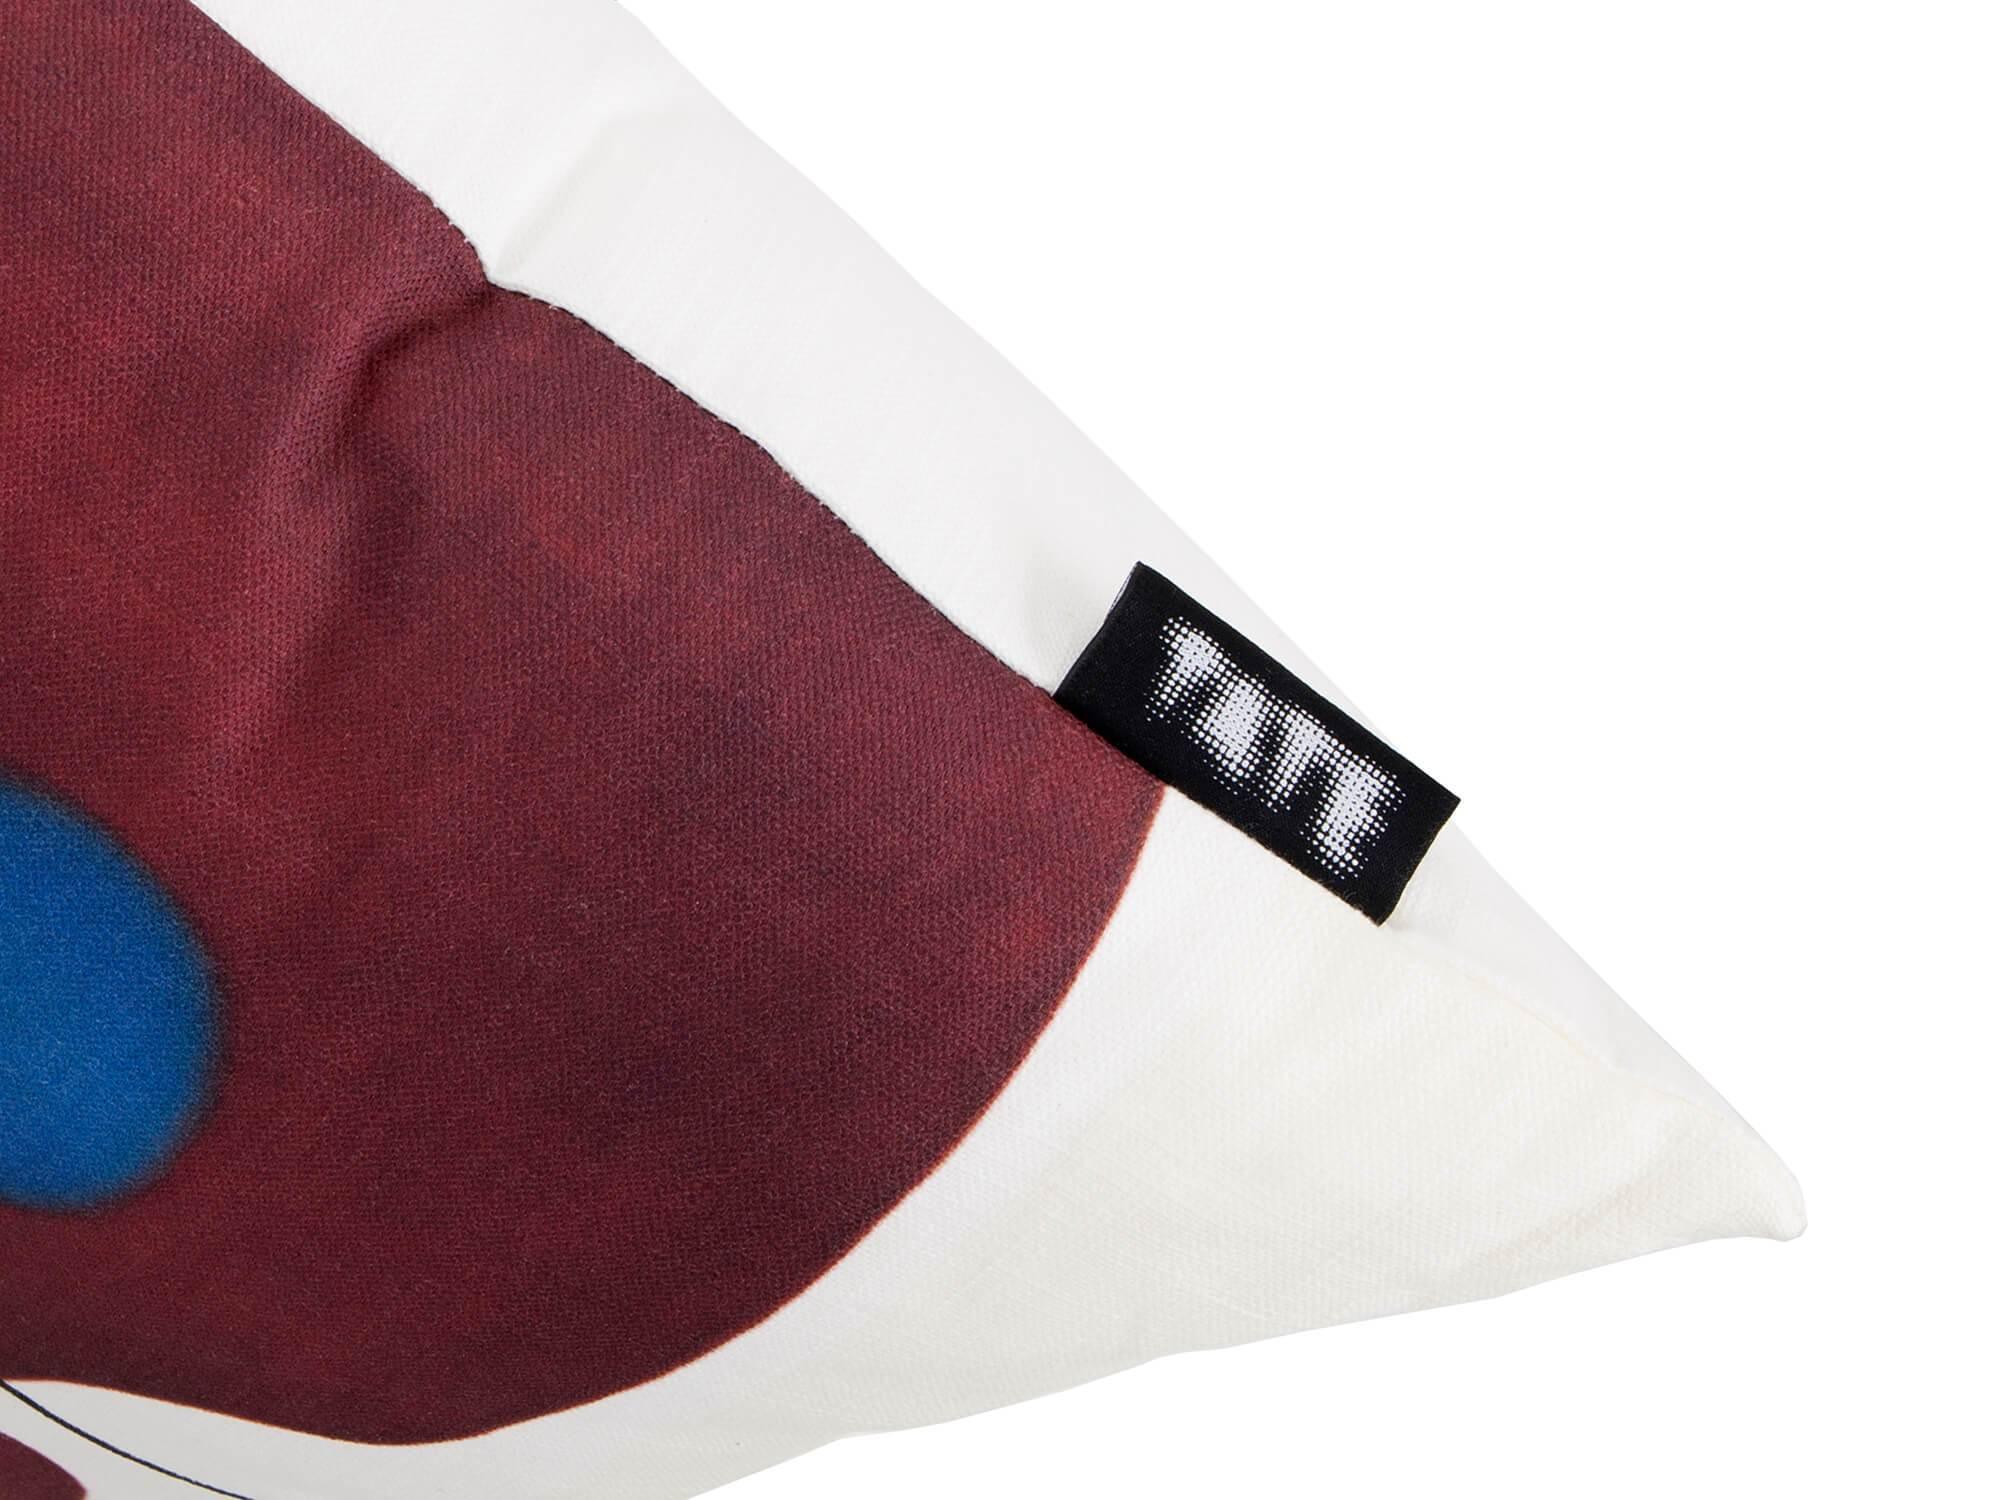 The Sleeping Fool - Cecil Collins - TATE Cushion - Handmade Cushions UK - WeLoveCushions